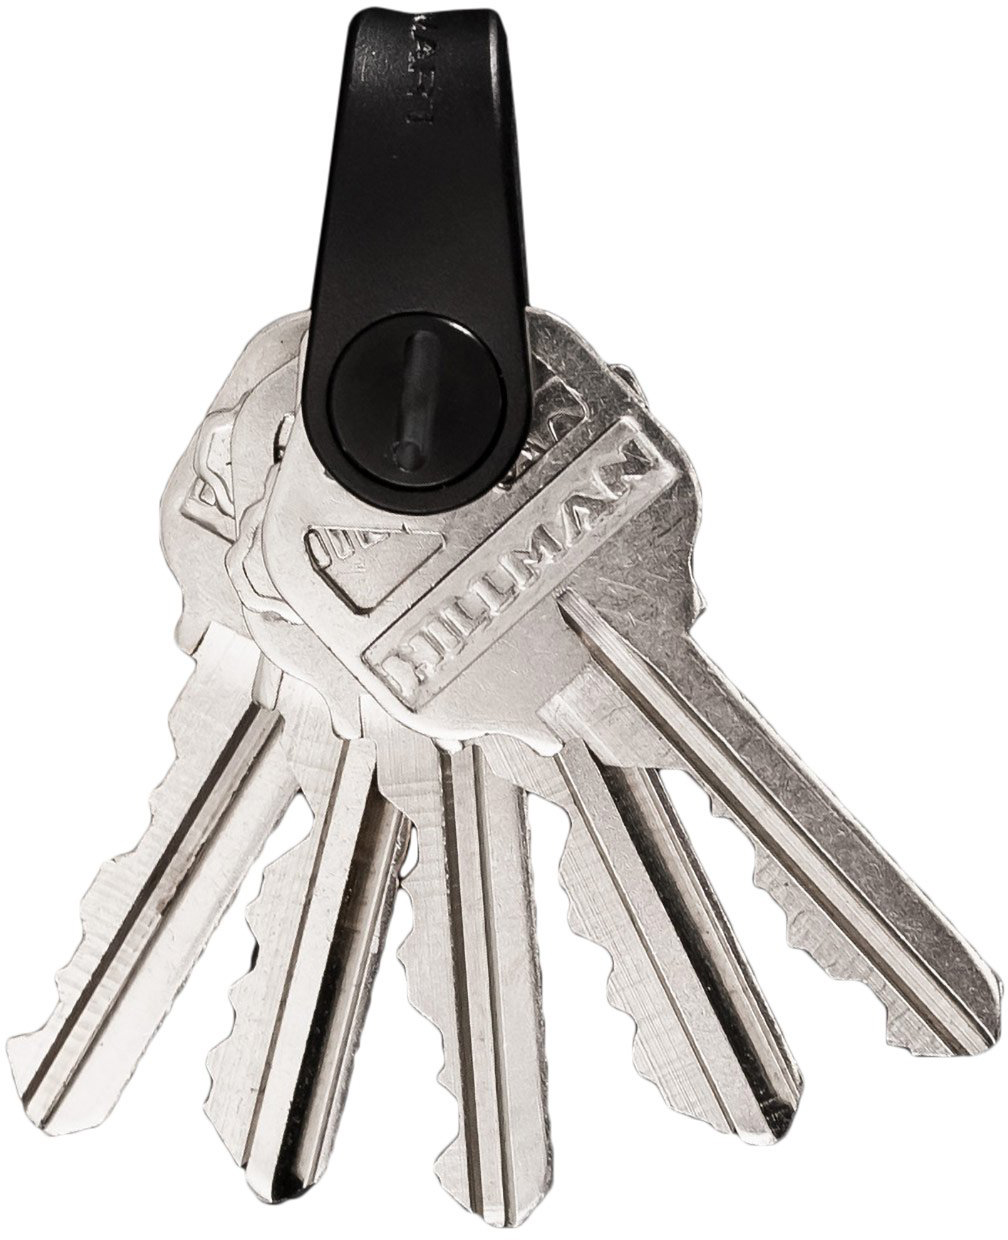 Keysmart Original Compact Key Holder Black